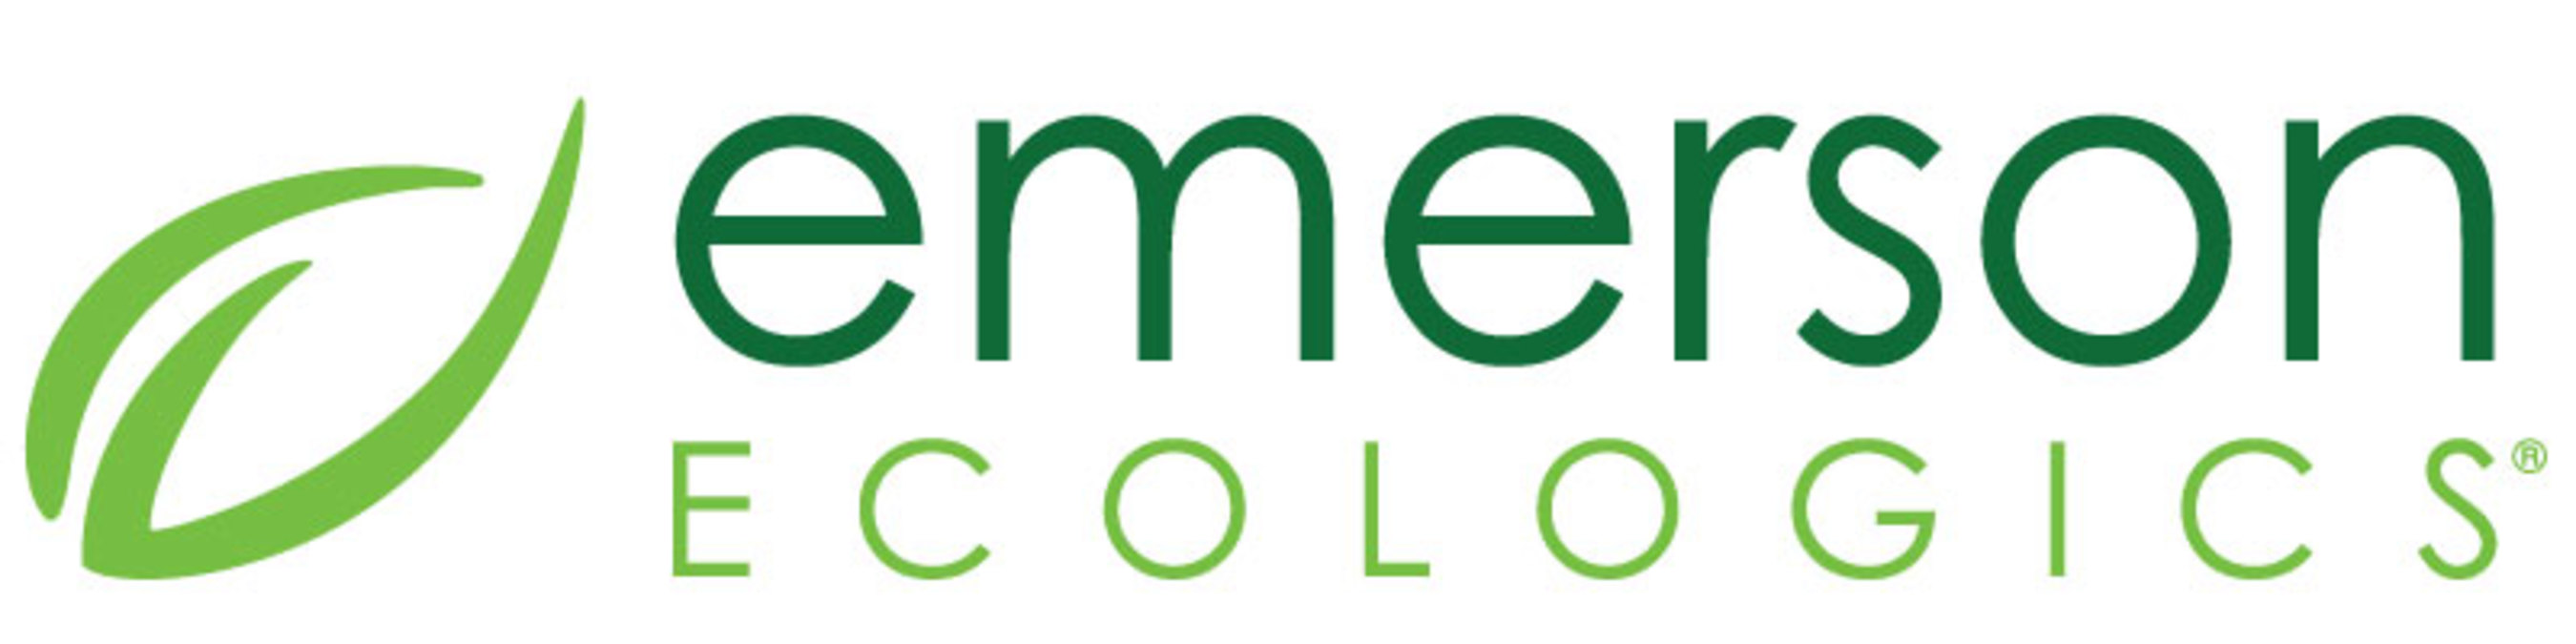 Emerson Ecologics logo. (PRNewsFoto/Emerson Ecologics, LLC) (PRNewsFoto/EMERSON ECOLOGICS, LLC)